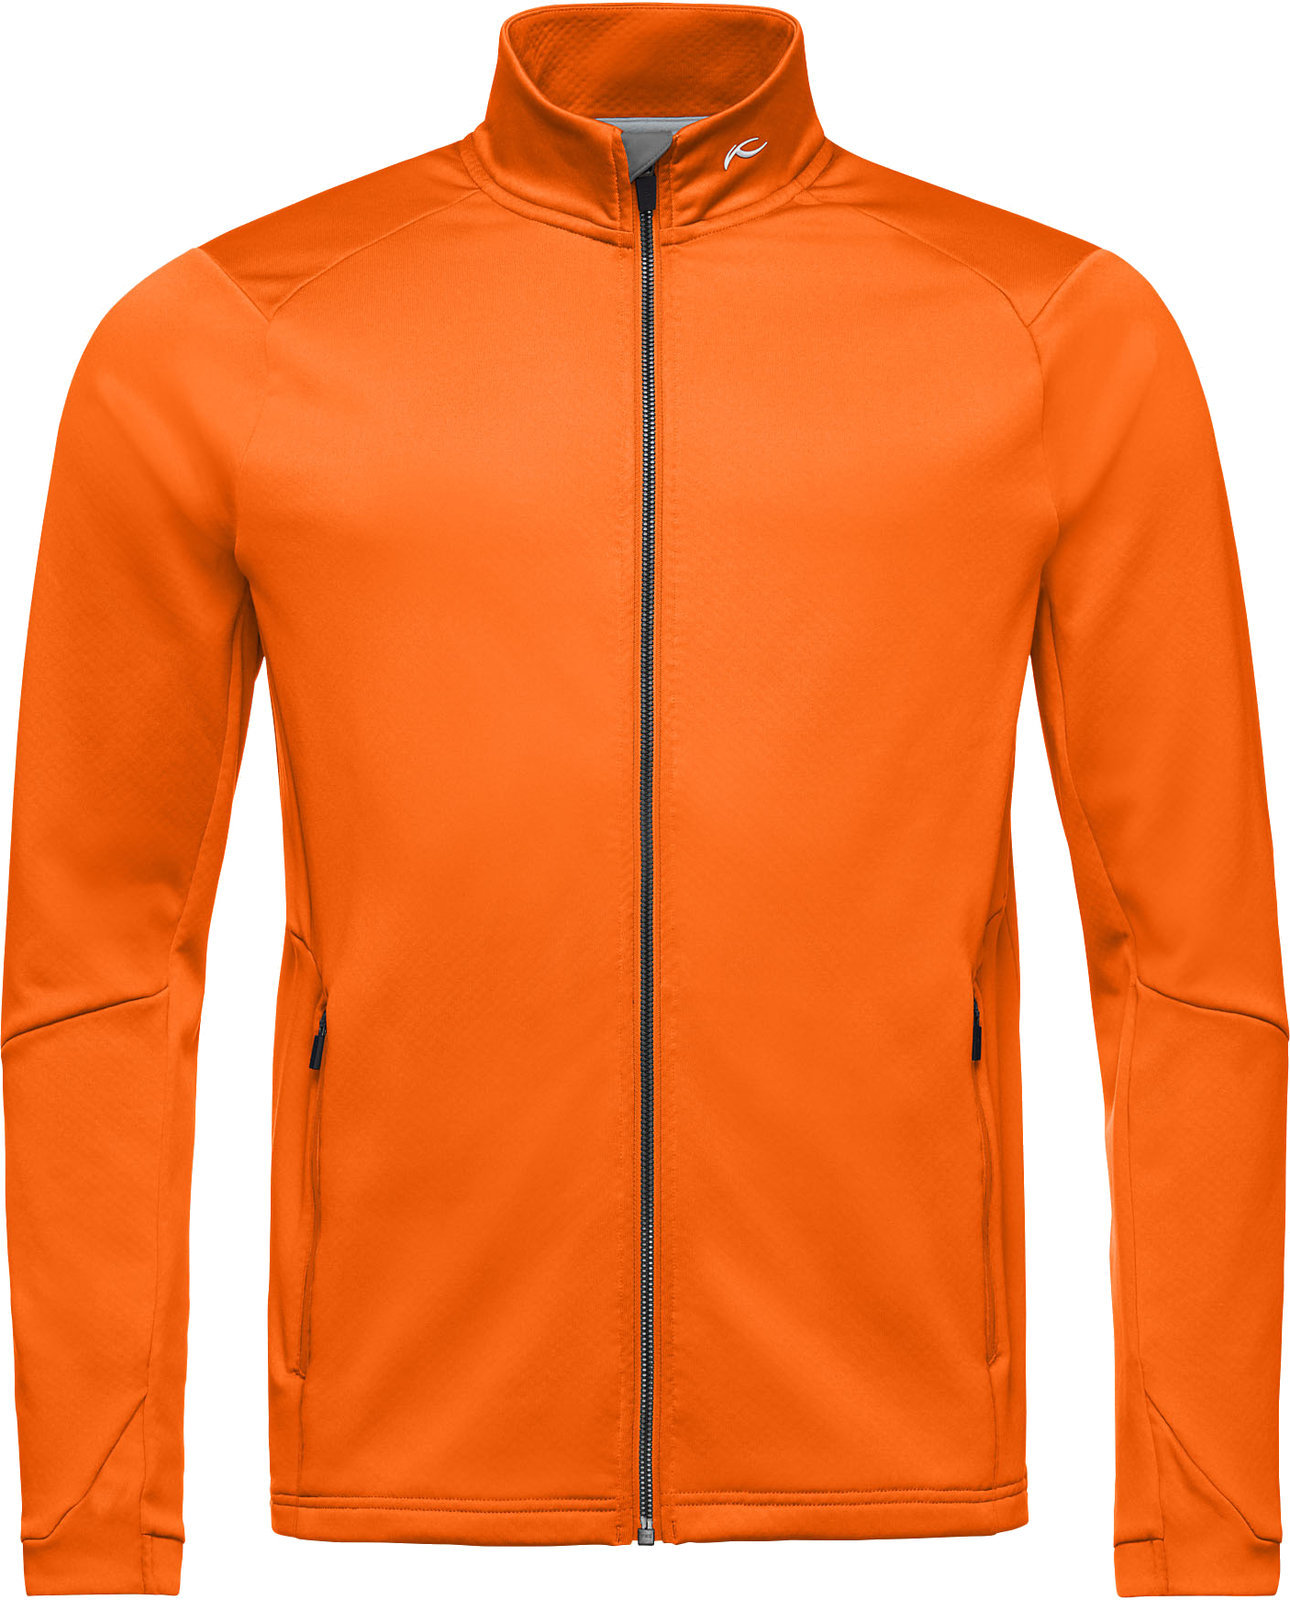 Smučarska jakna Kjus Oranžna 54